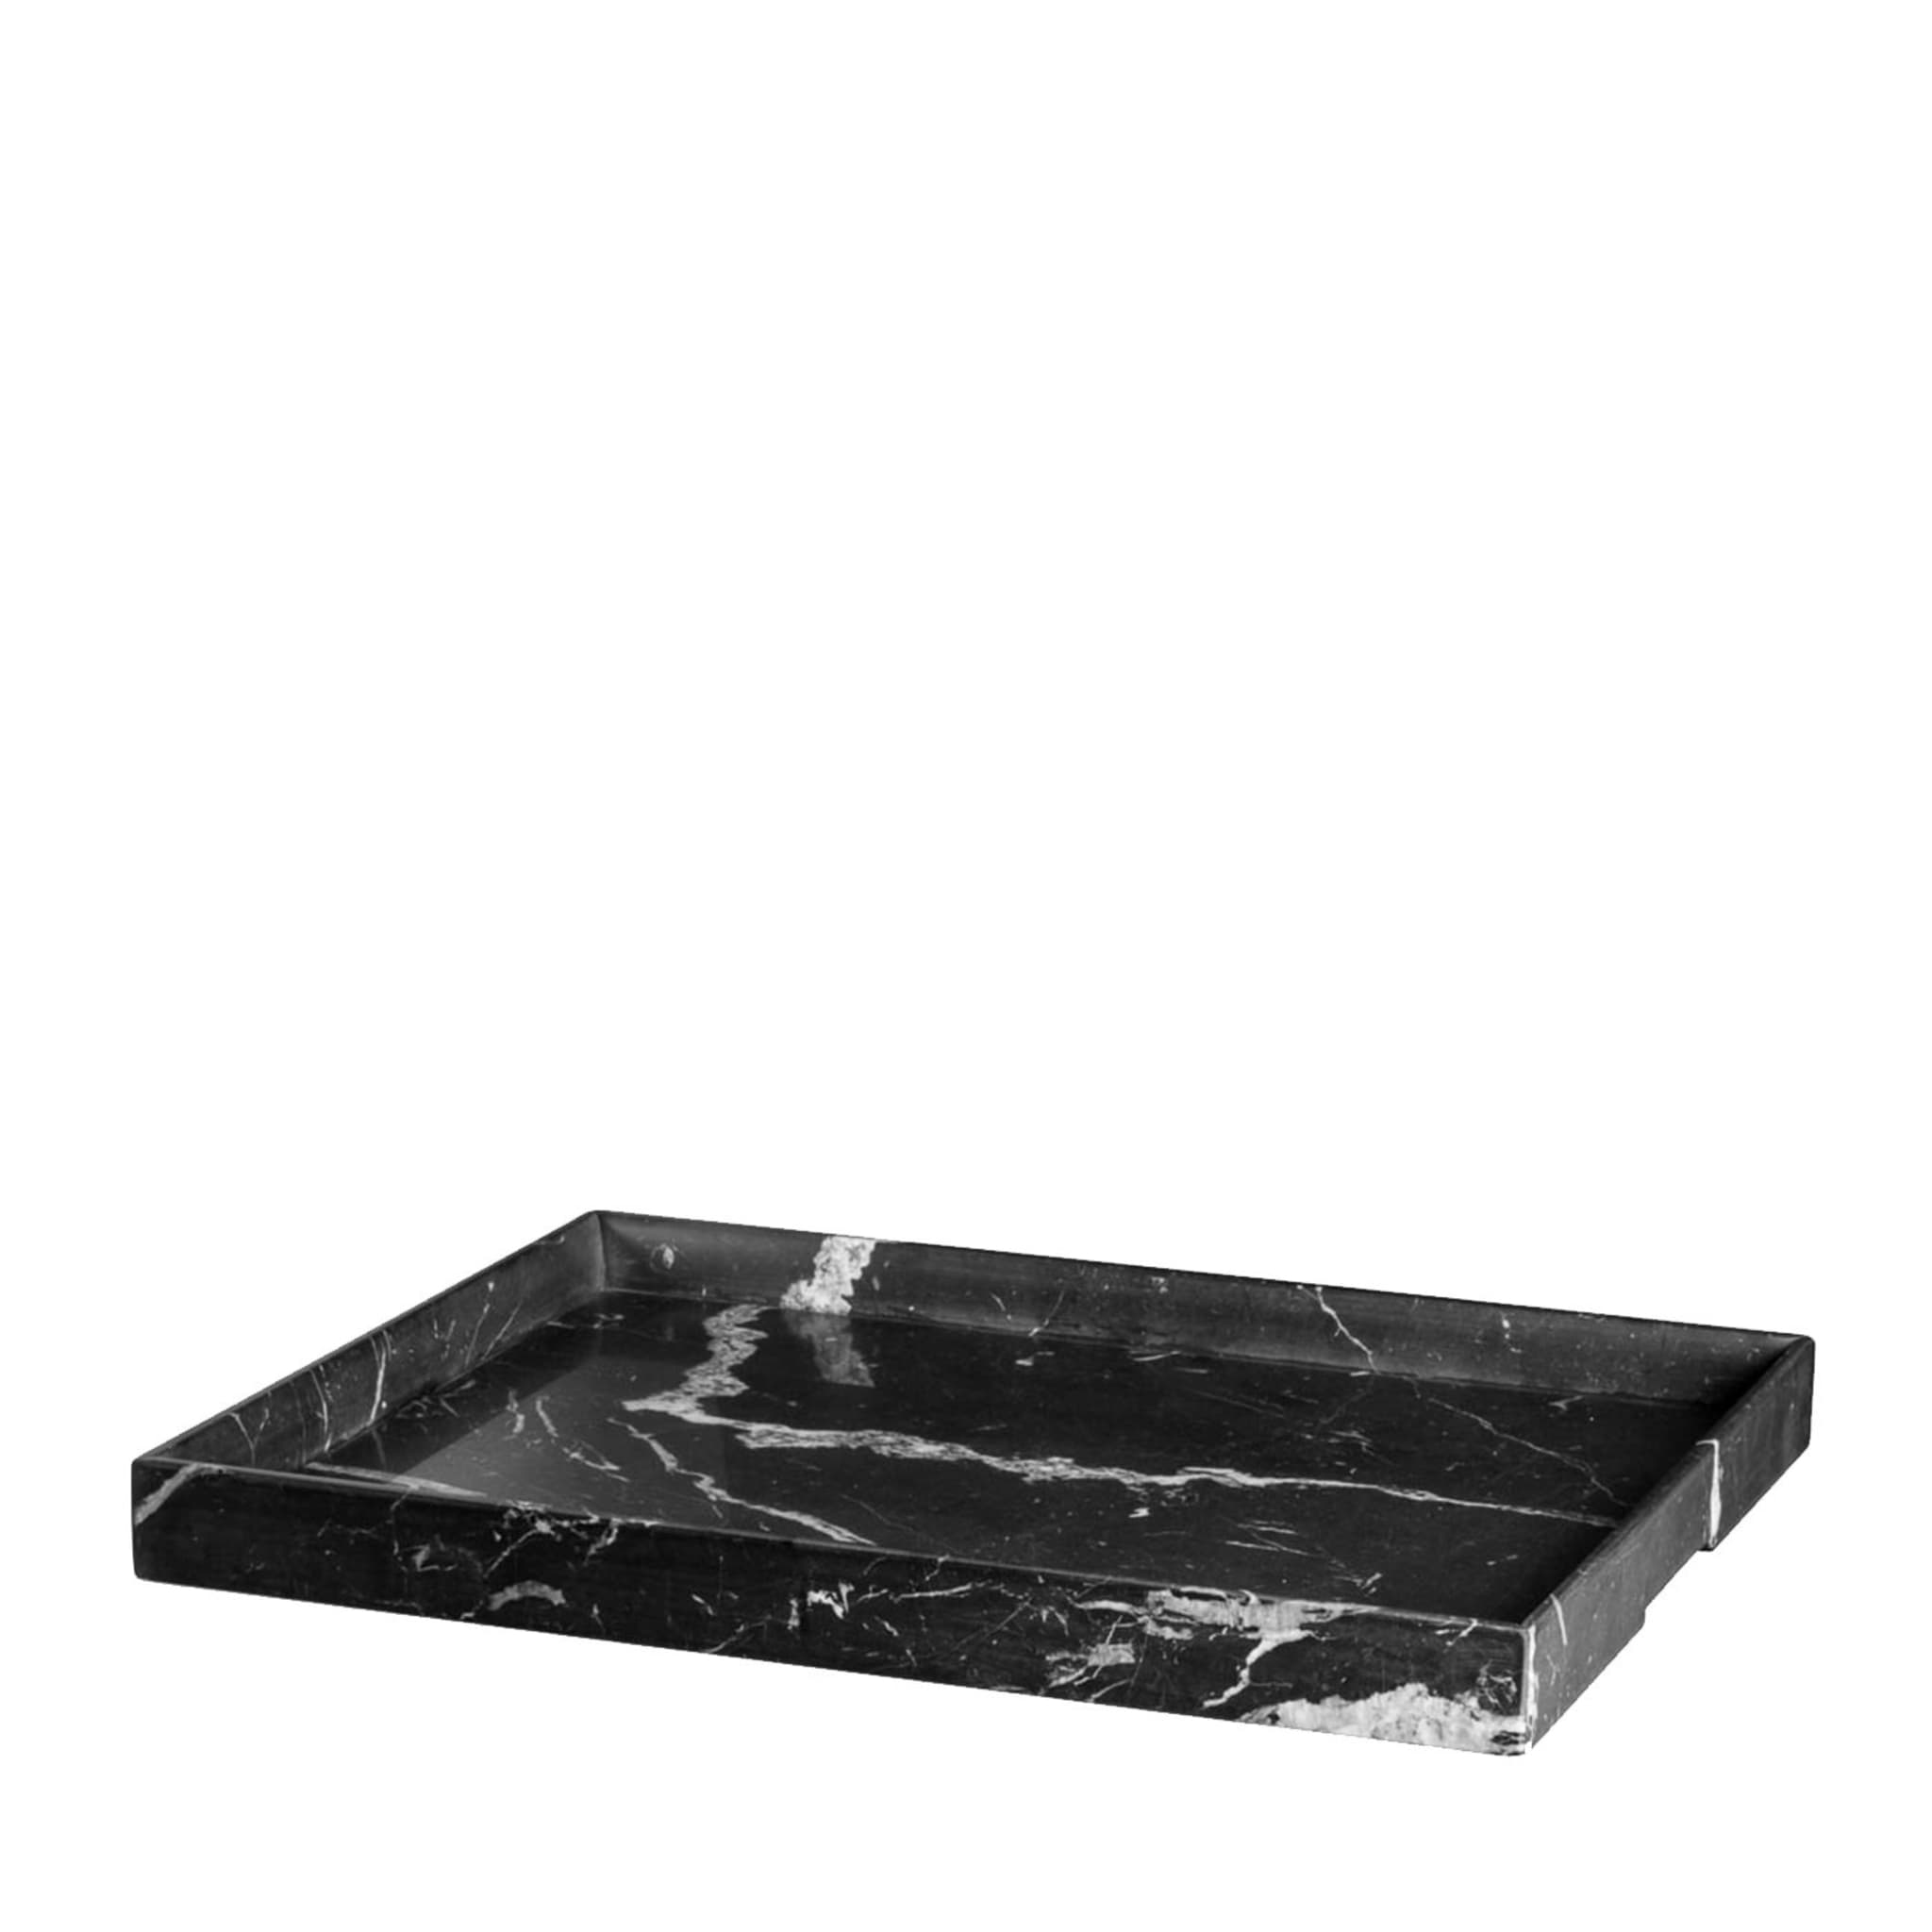 Convivio Maxi Solid Tray in Marquina Marble - Main view